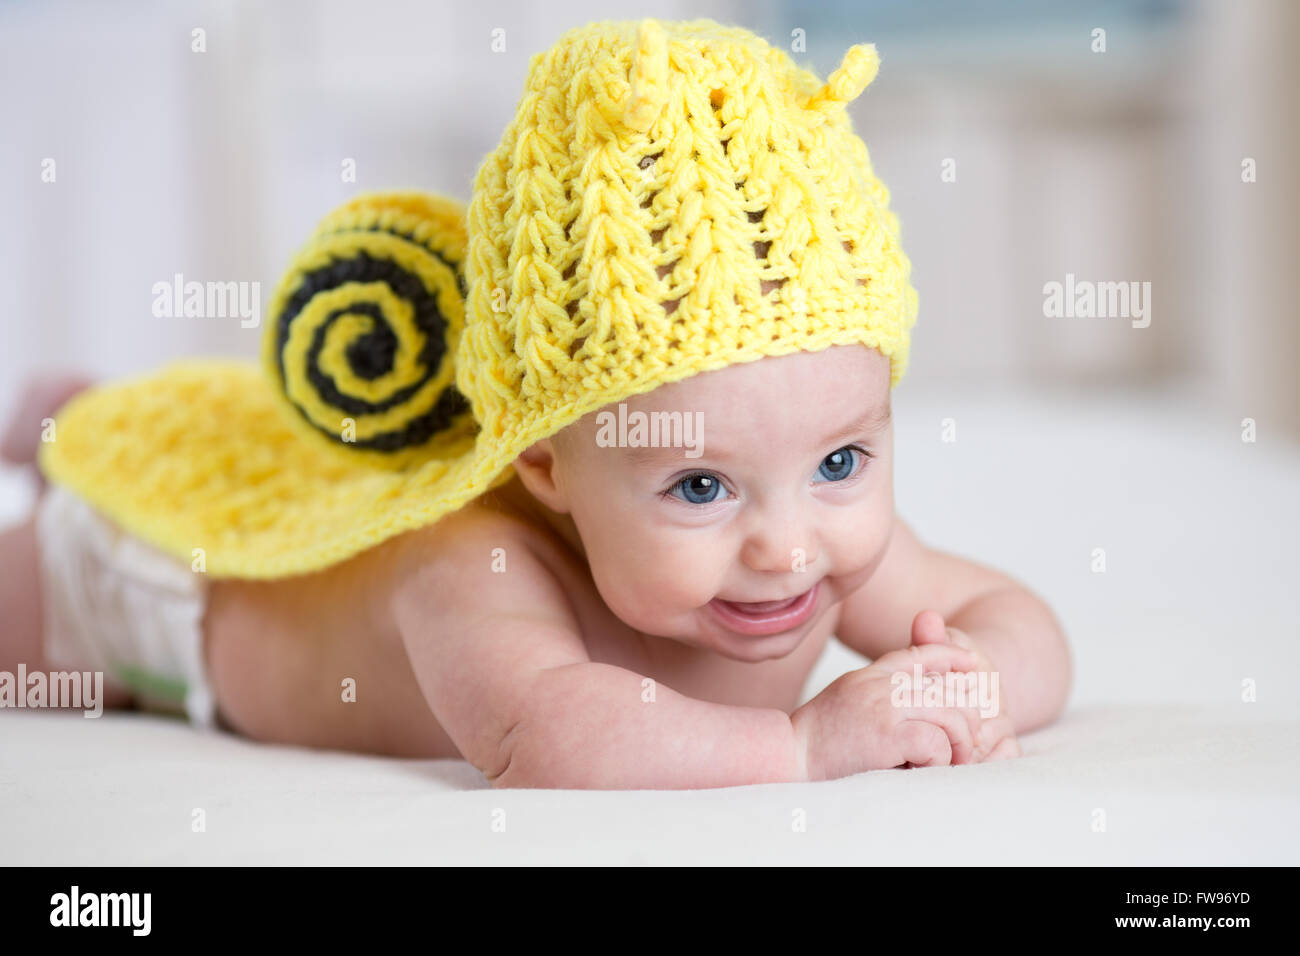 Baby Kind in lustige Schnecke Kostüm Stockfoto